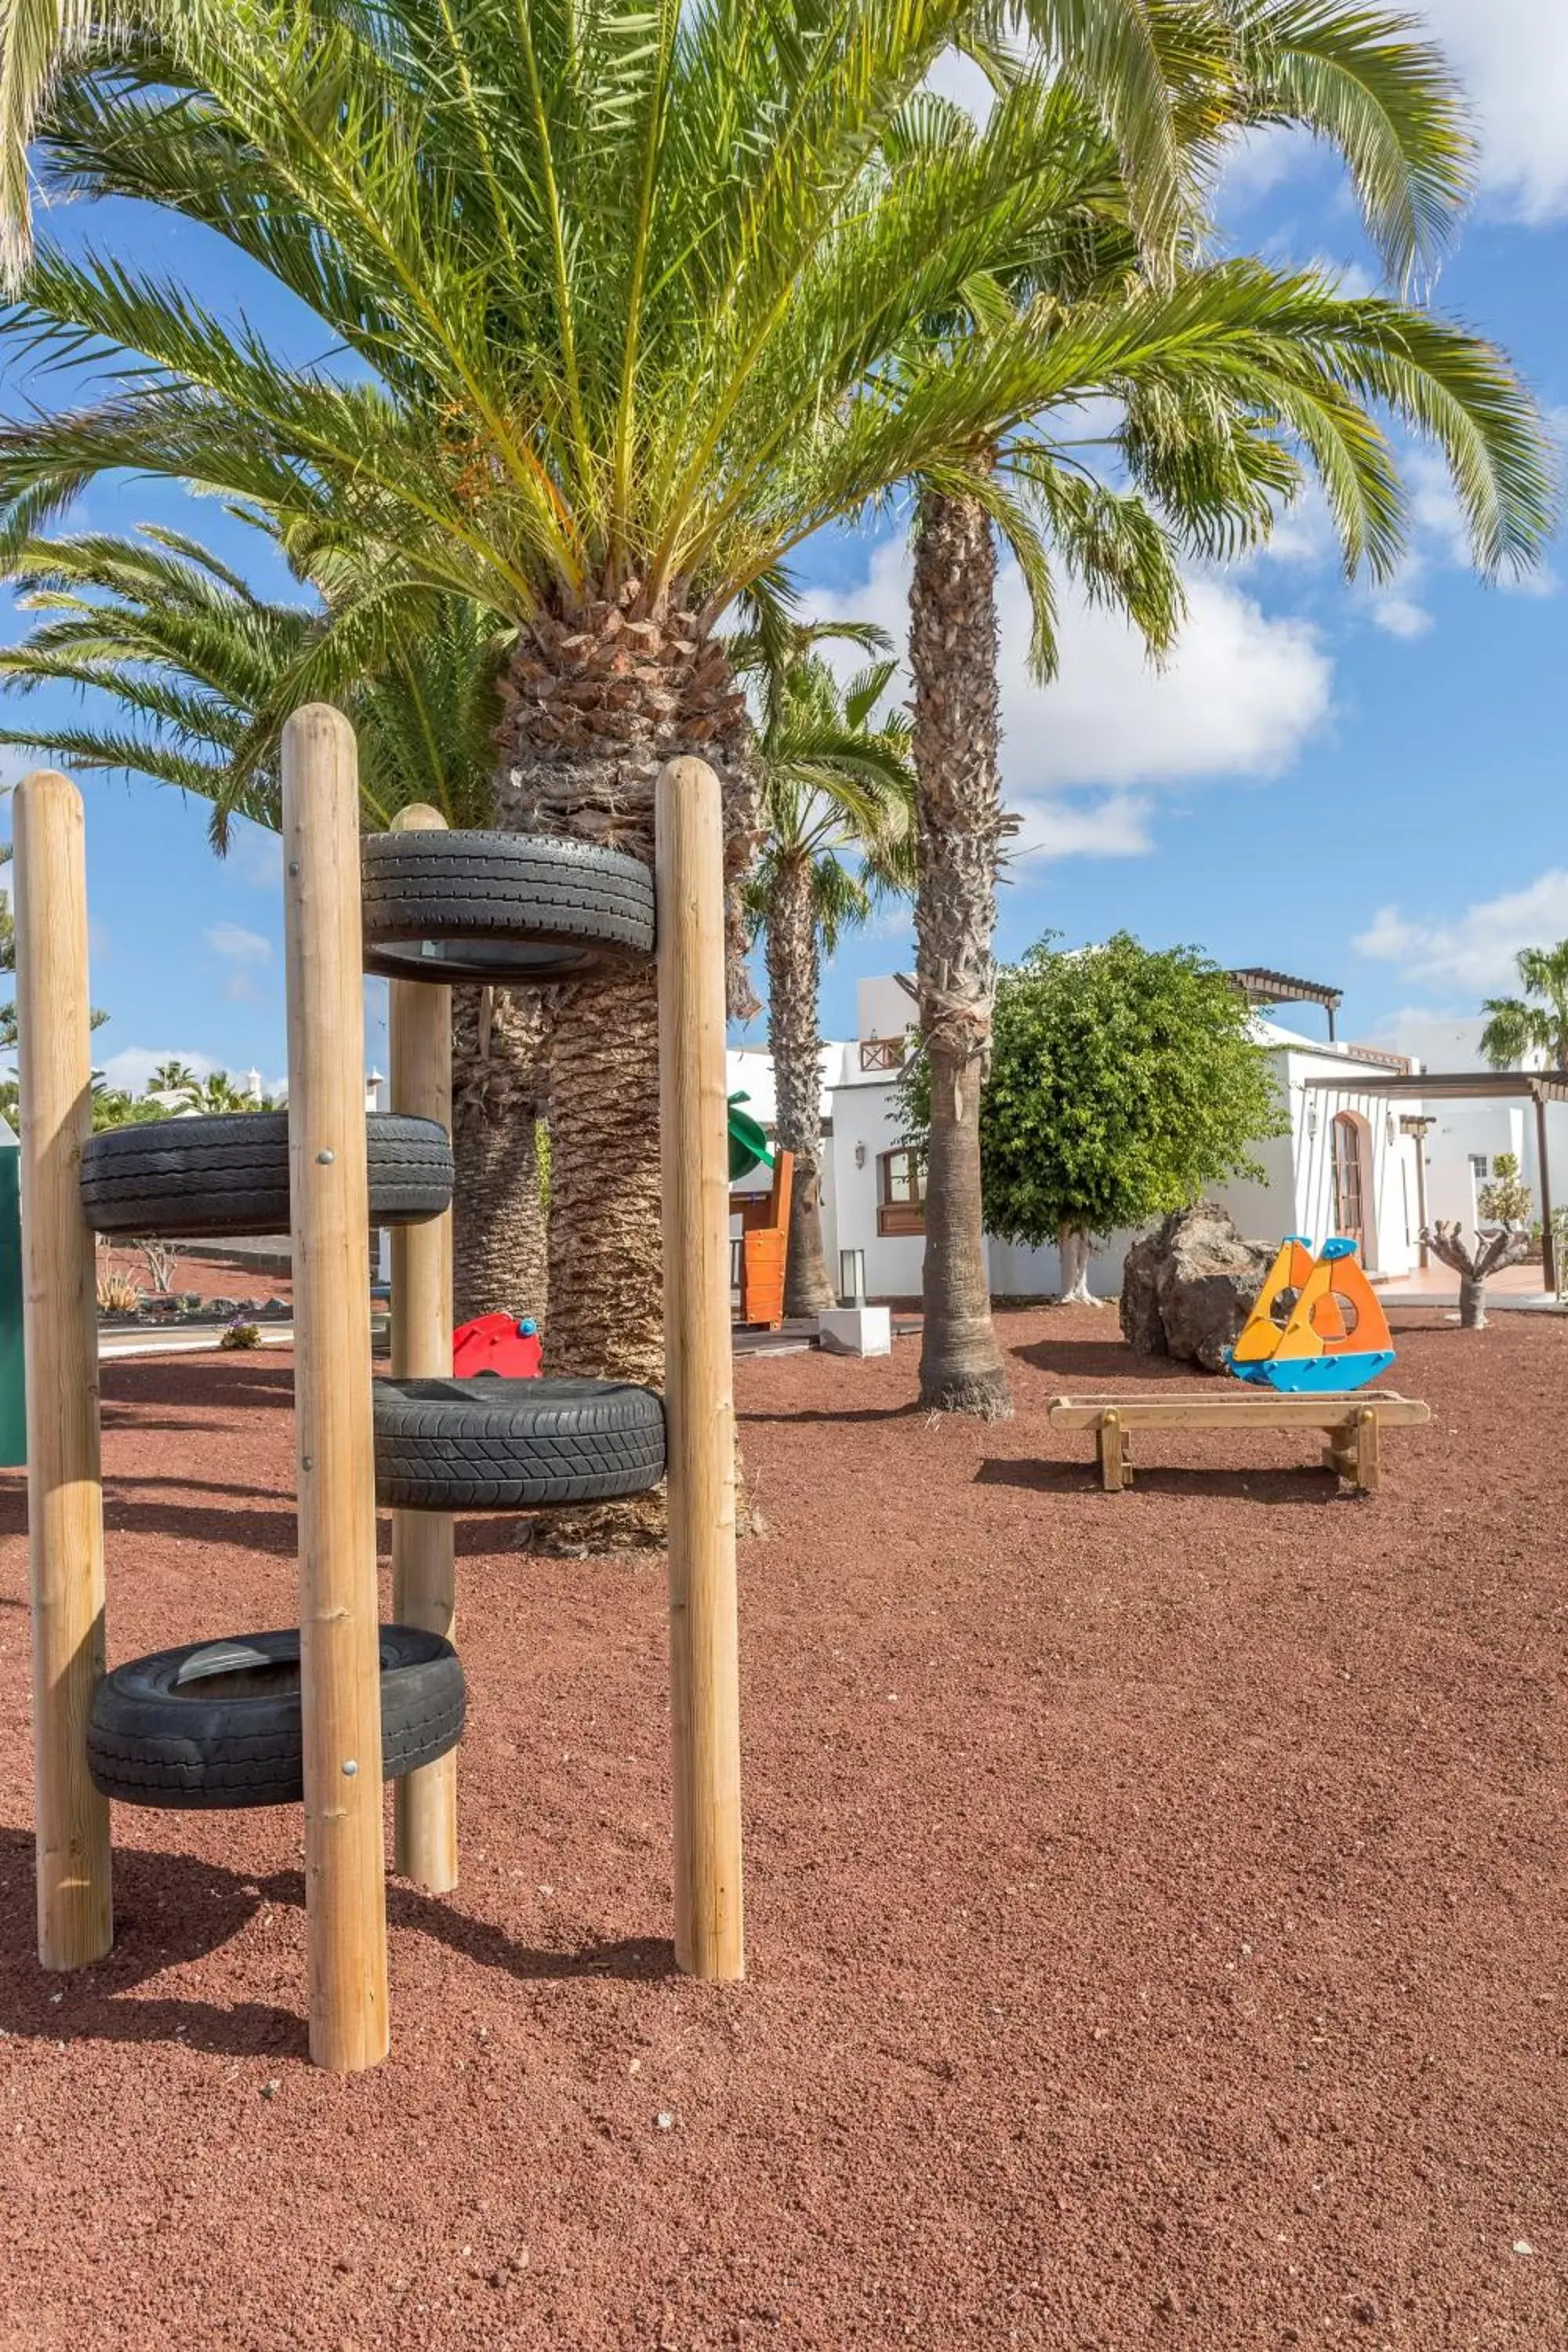 Children play ground, Children's Play Area in Jardines del Sol